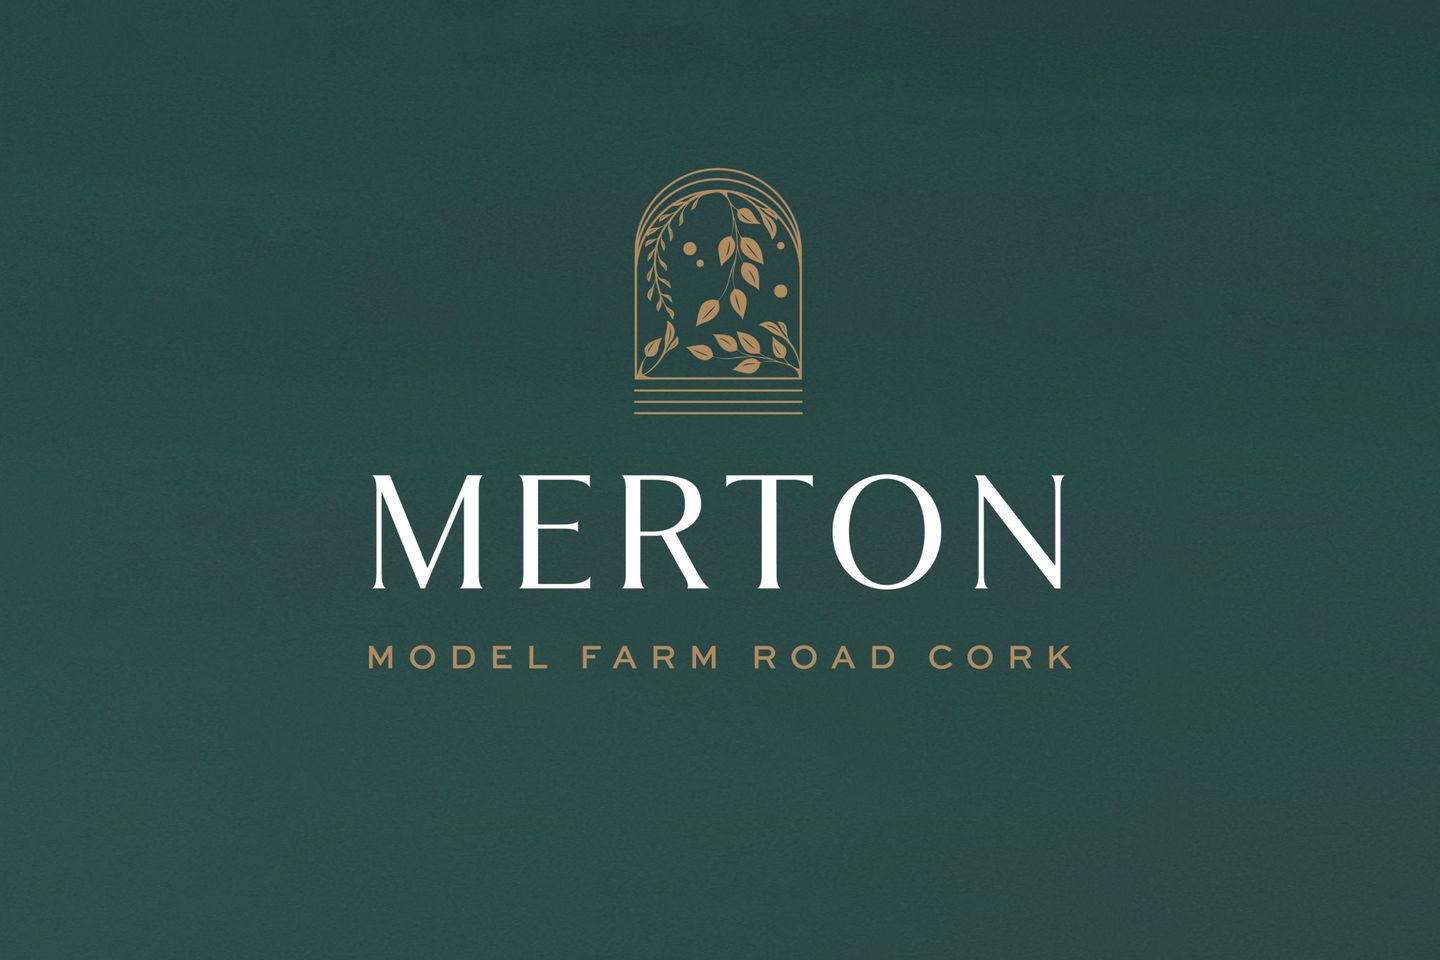 Four Bed Detached, Merton, Model Farm Road, Co. Cork, T12NHF6